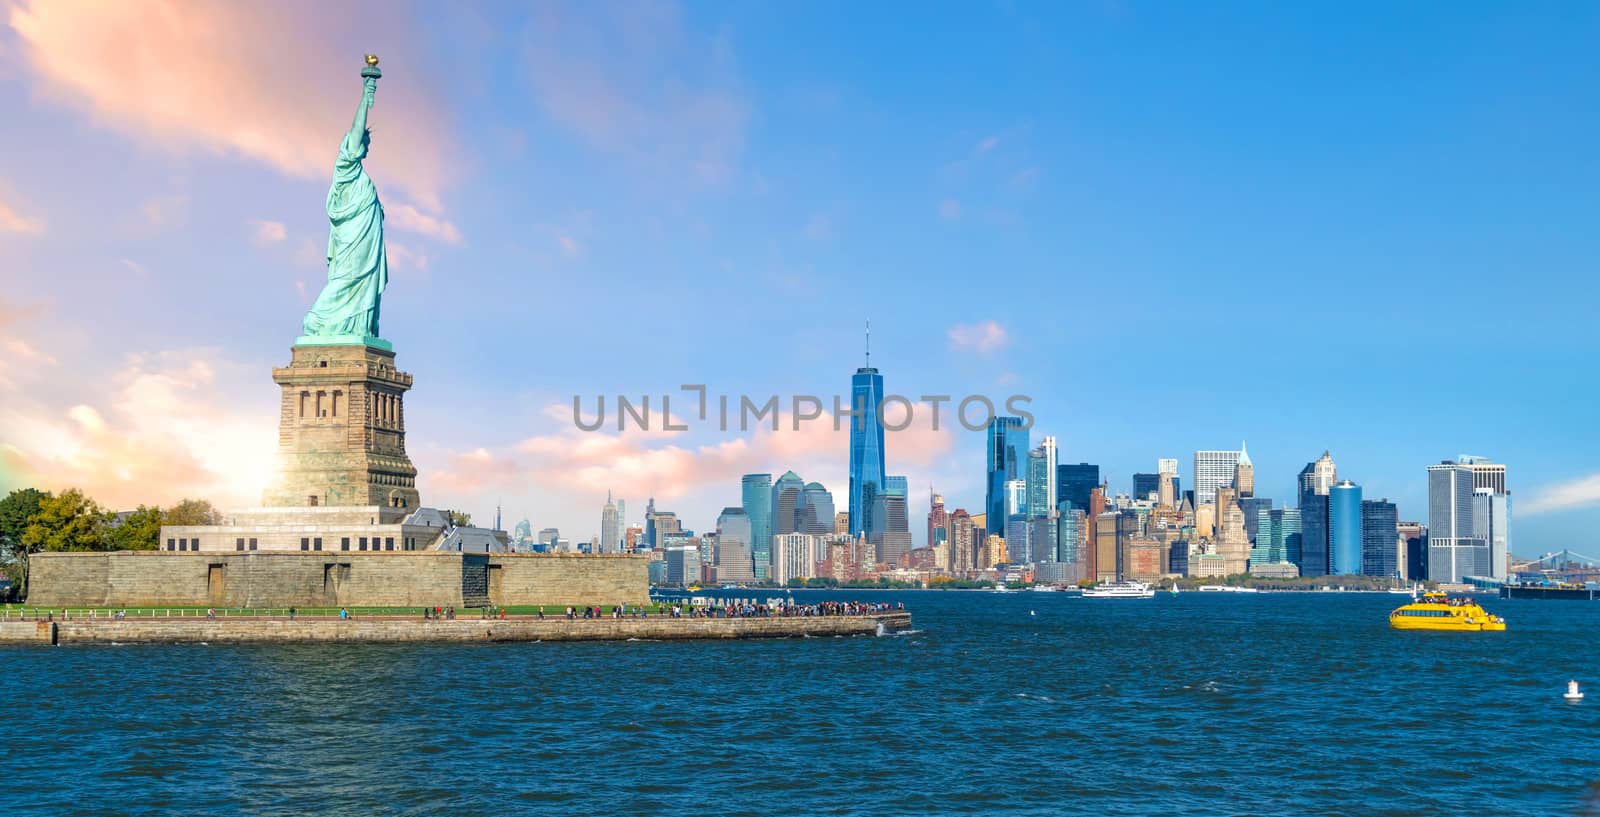 The Statue of Liberty with Manhattan city skyline background, Landmarks of New York City, USA